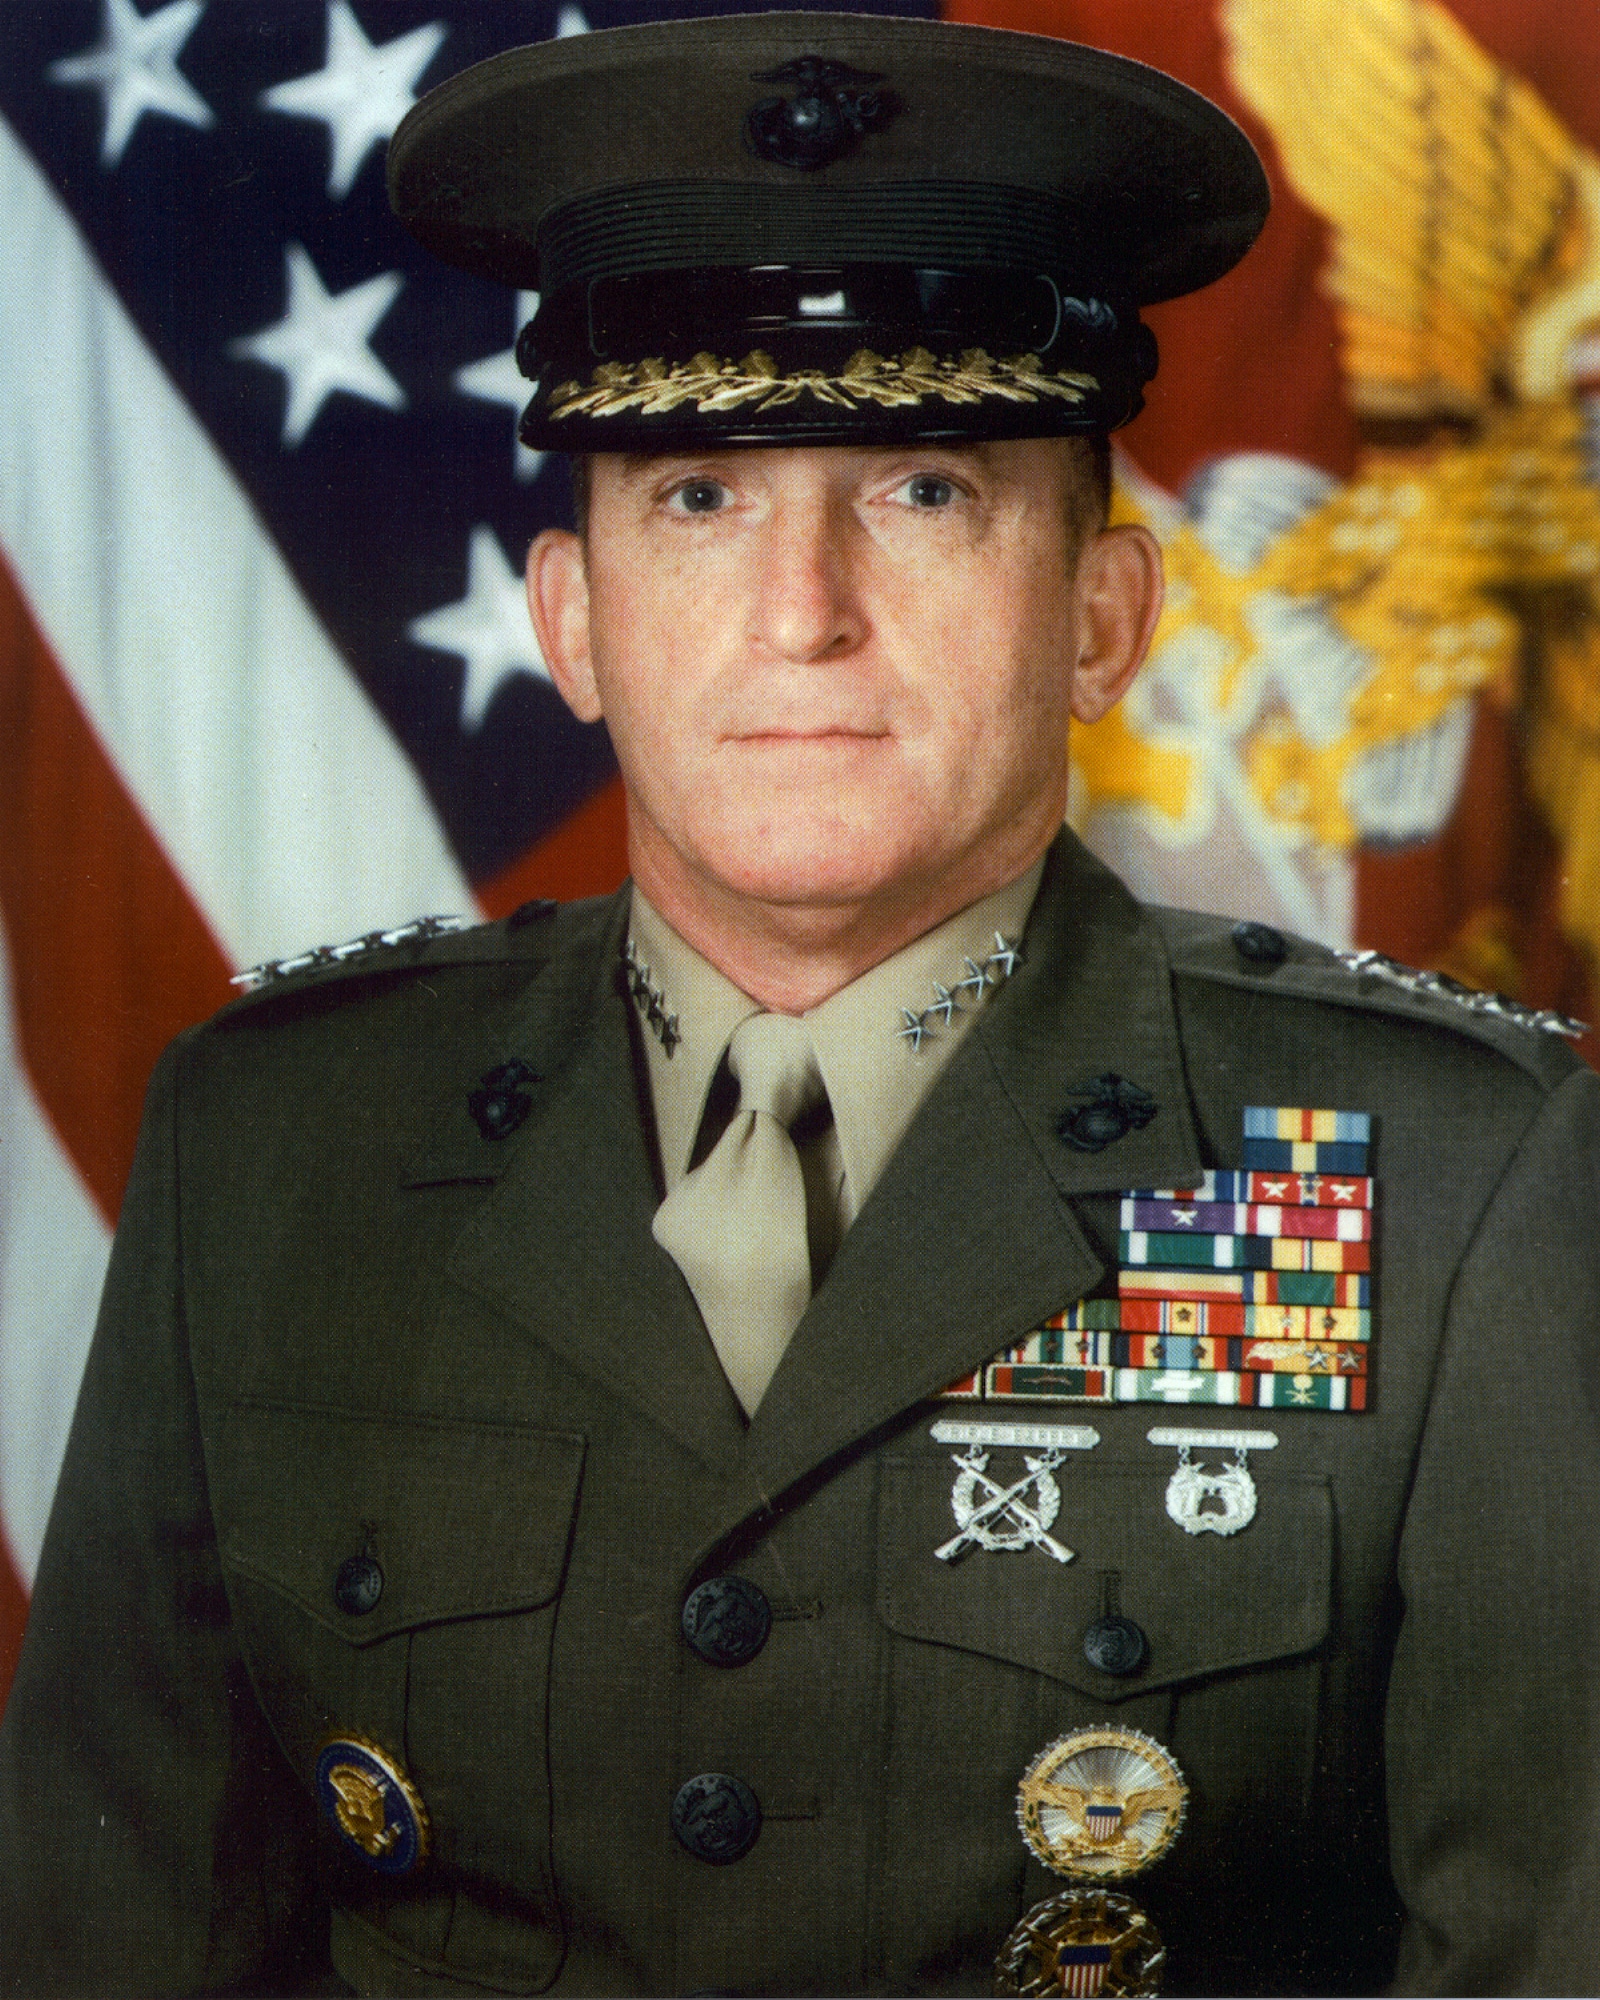 General Charles C. Krulak (Strategic Corporal)